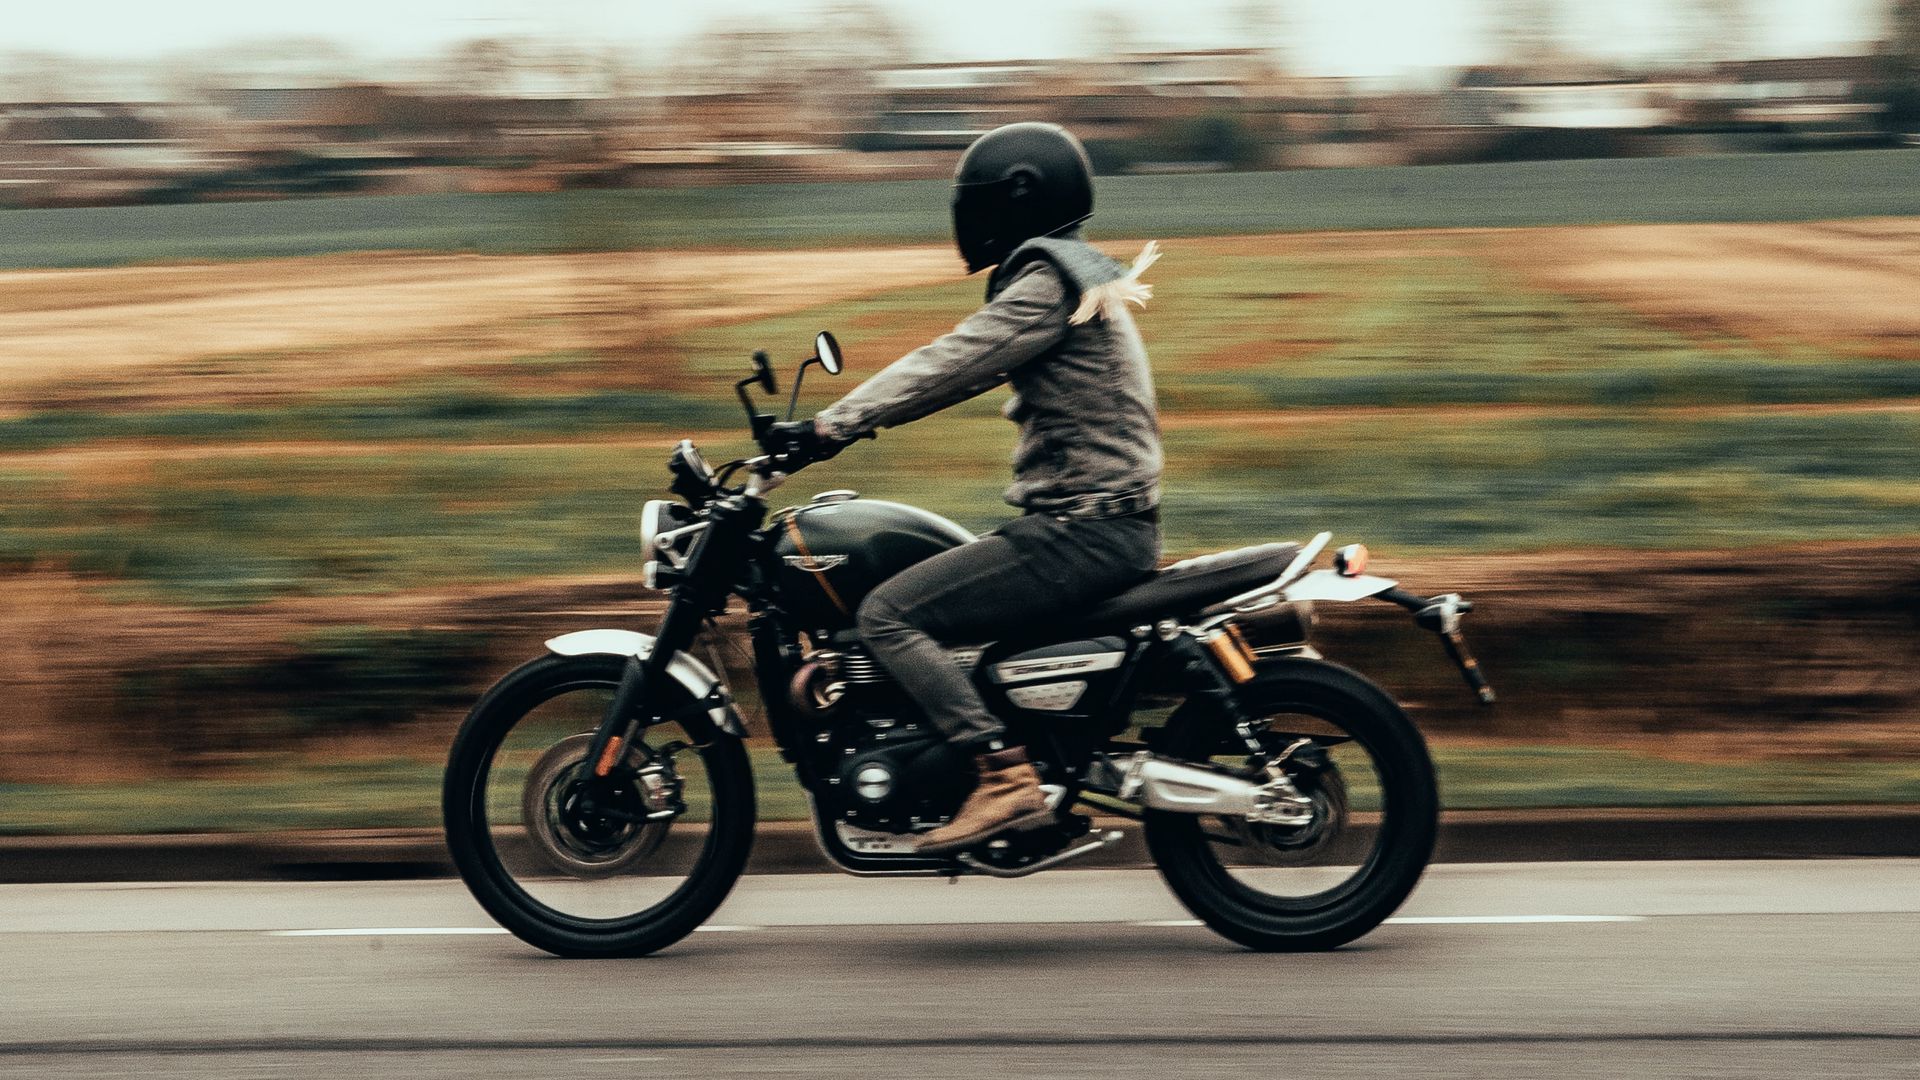 1920x1080 Обои мотоцикл, шлем, движение.